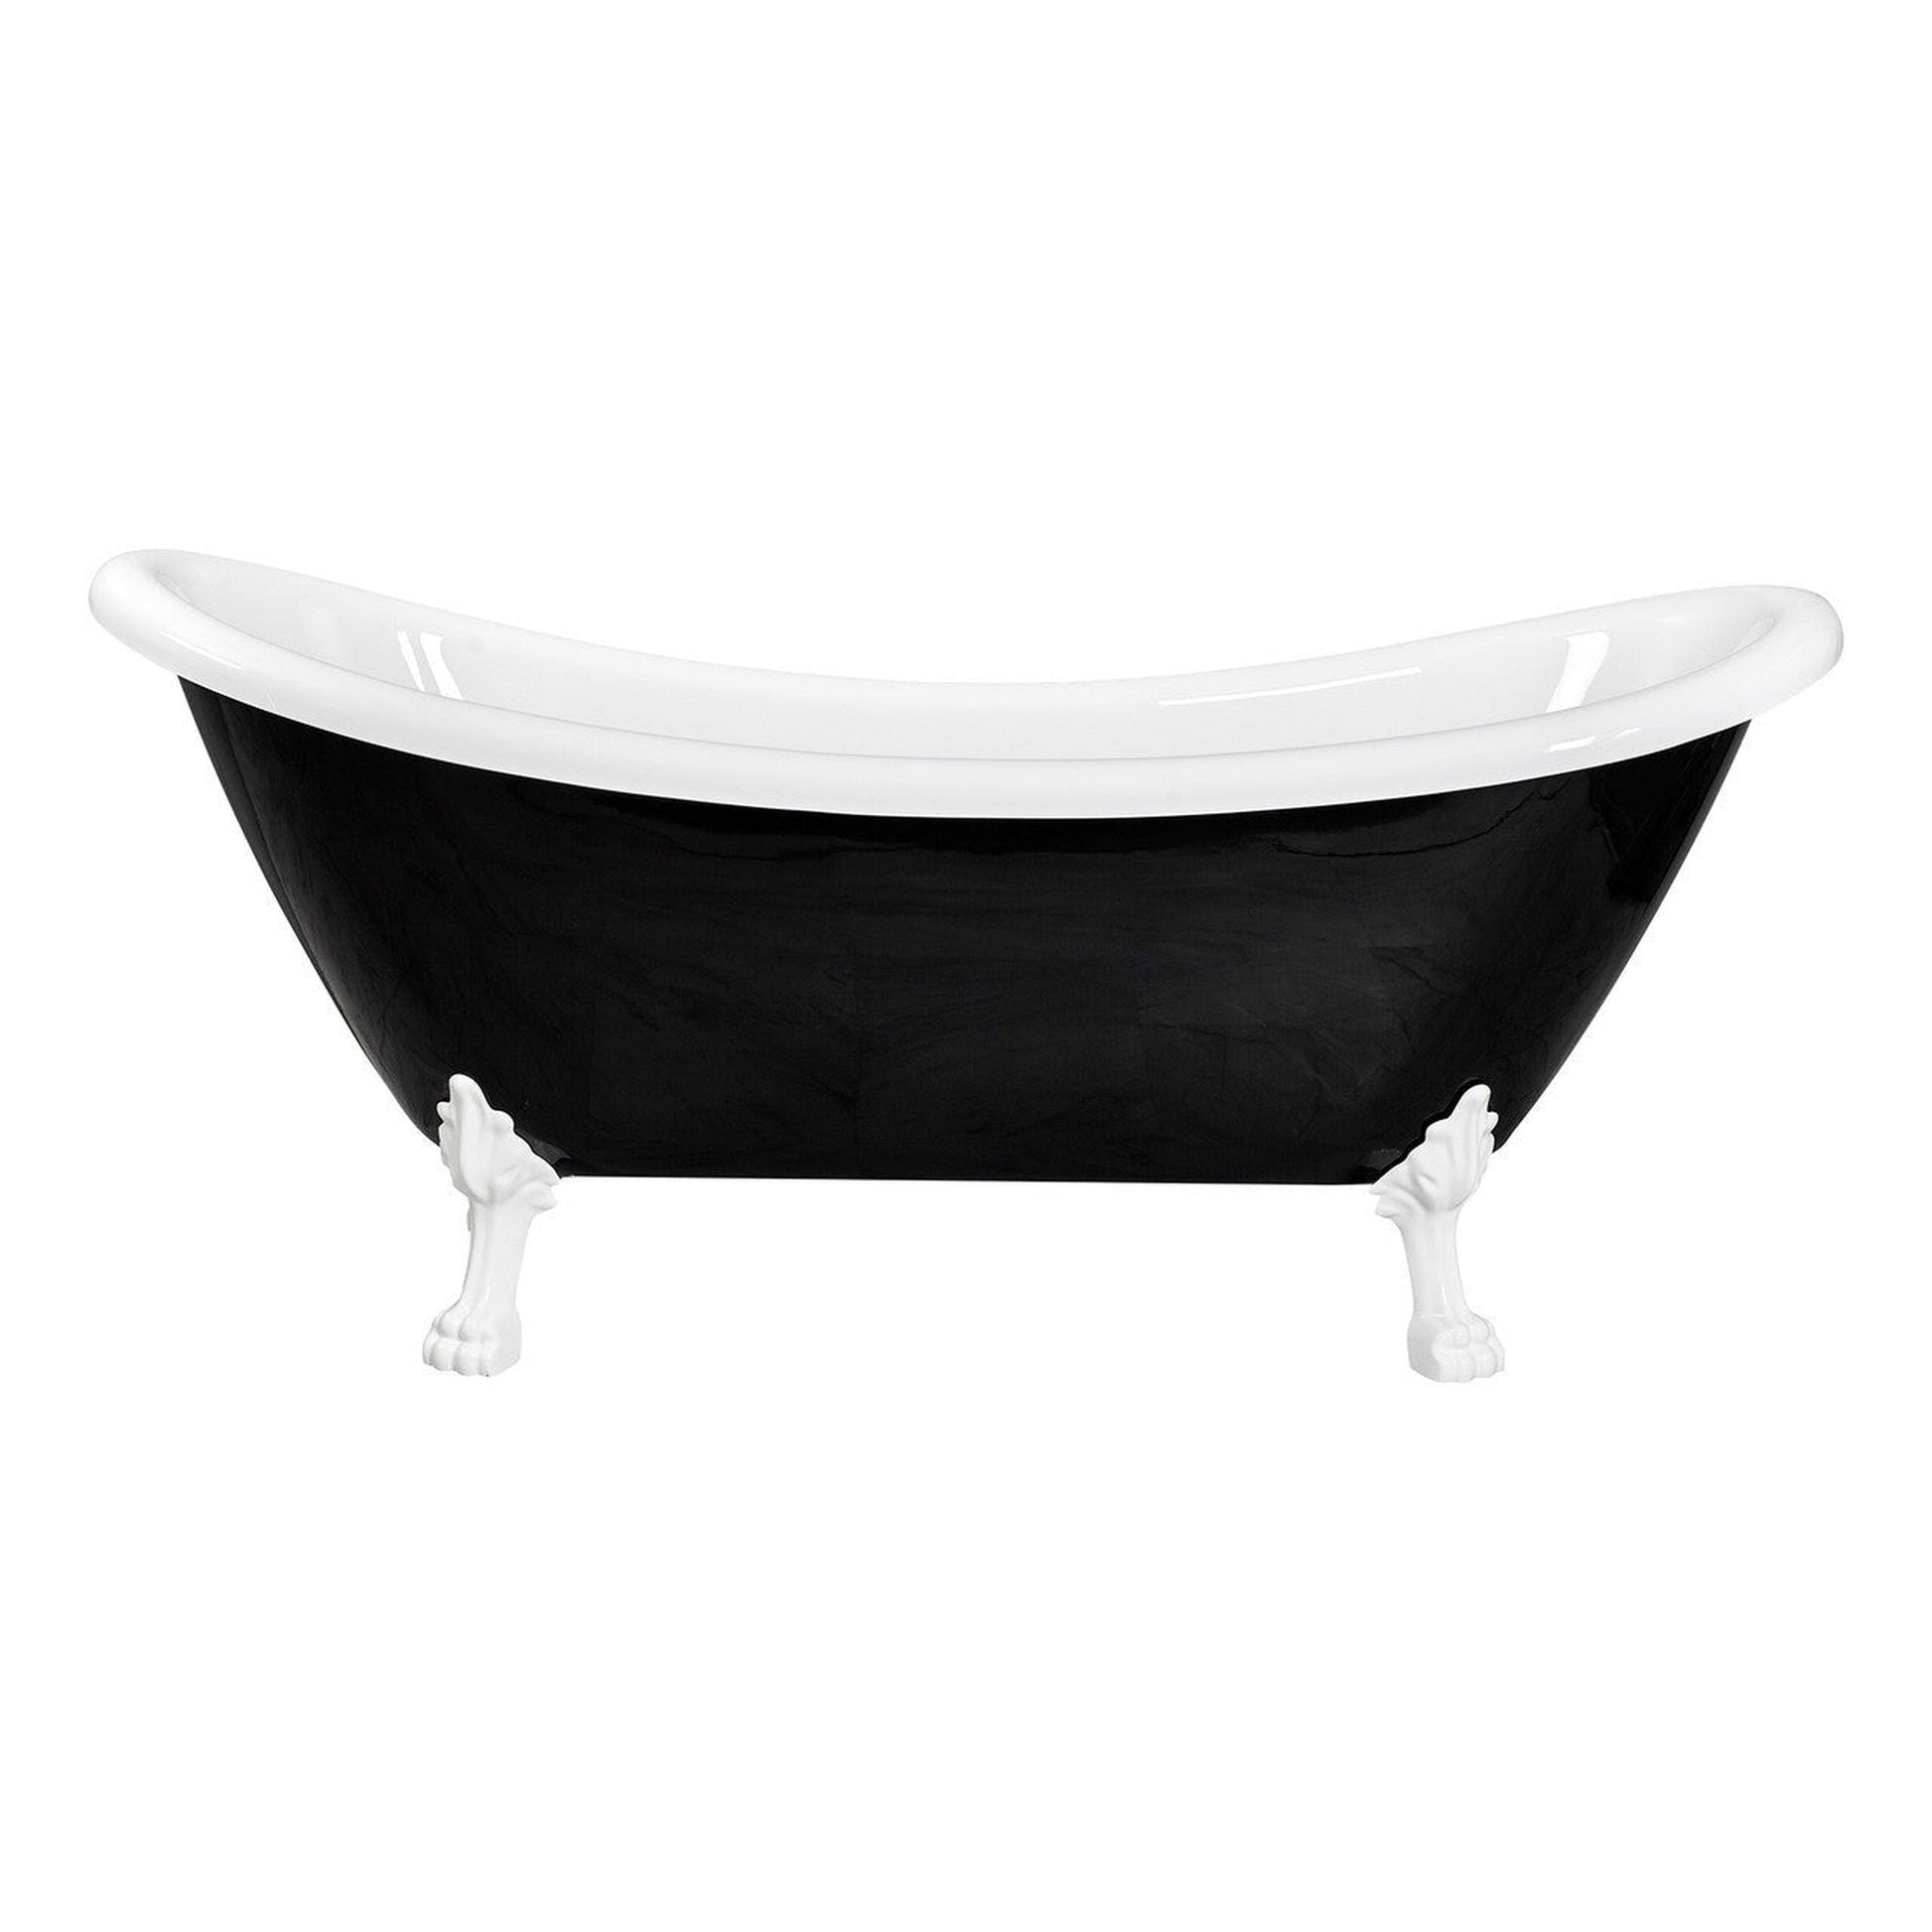 Castello USA Daphne 70" Black Acrylic Freestanding Bathtub With White Feet and Drain